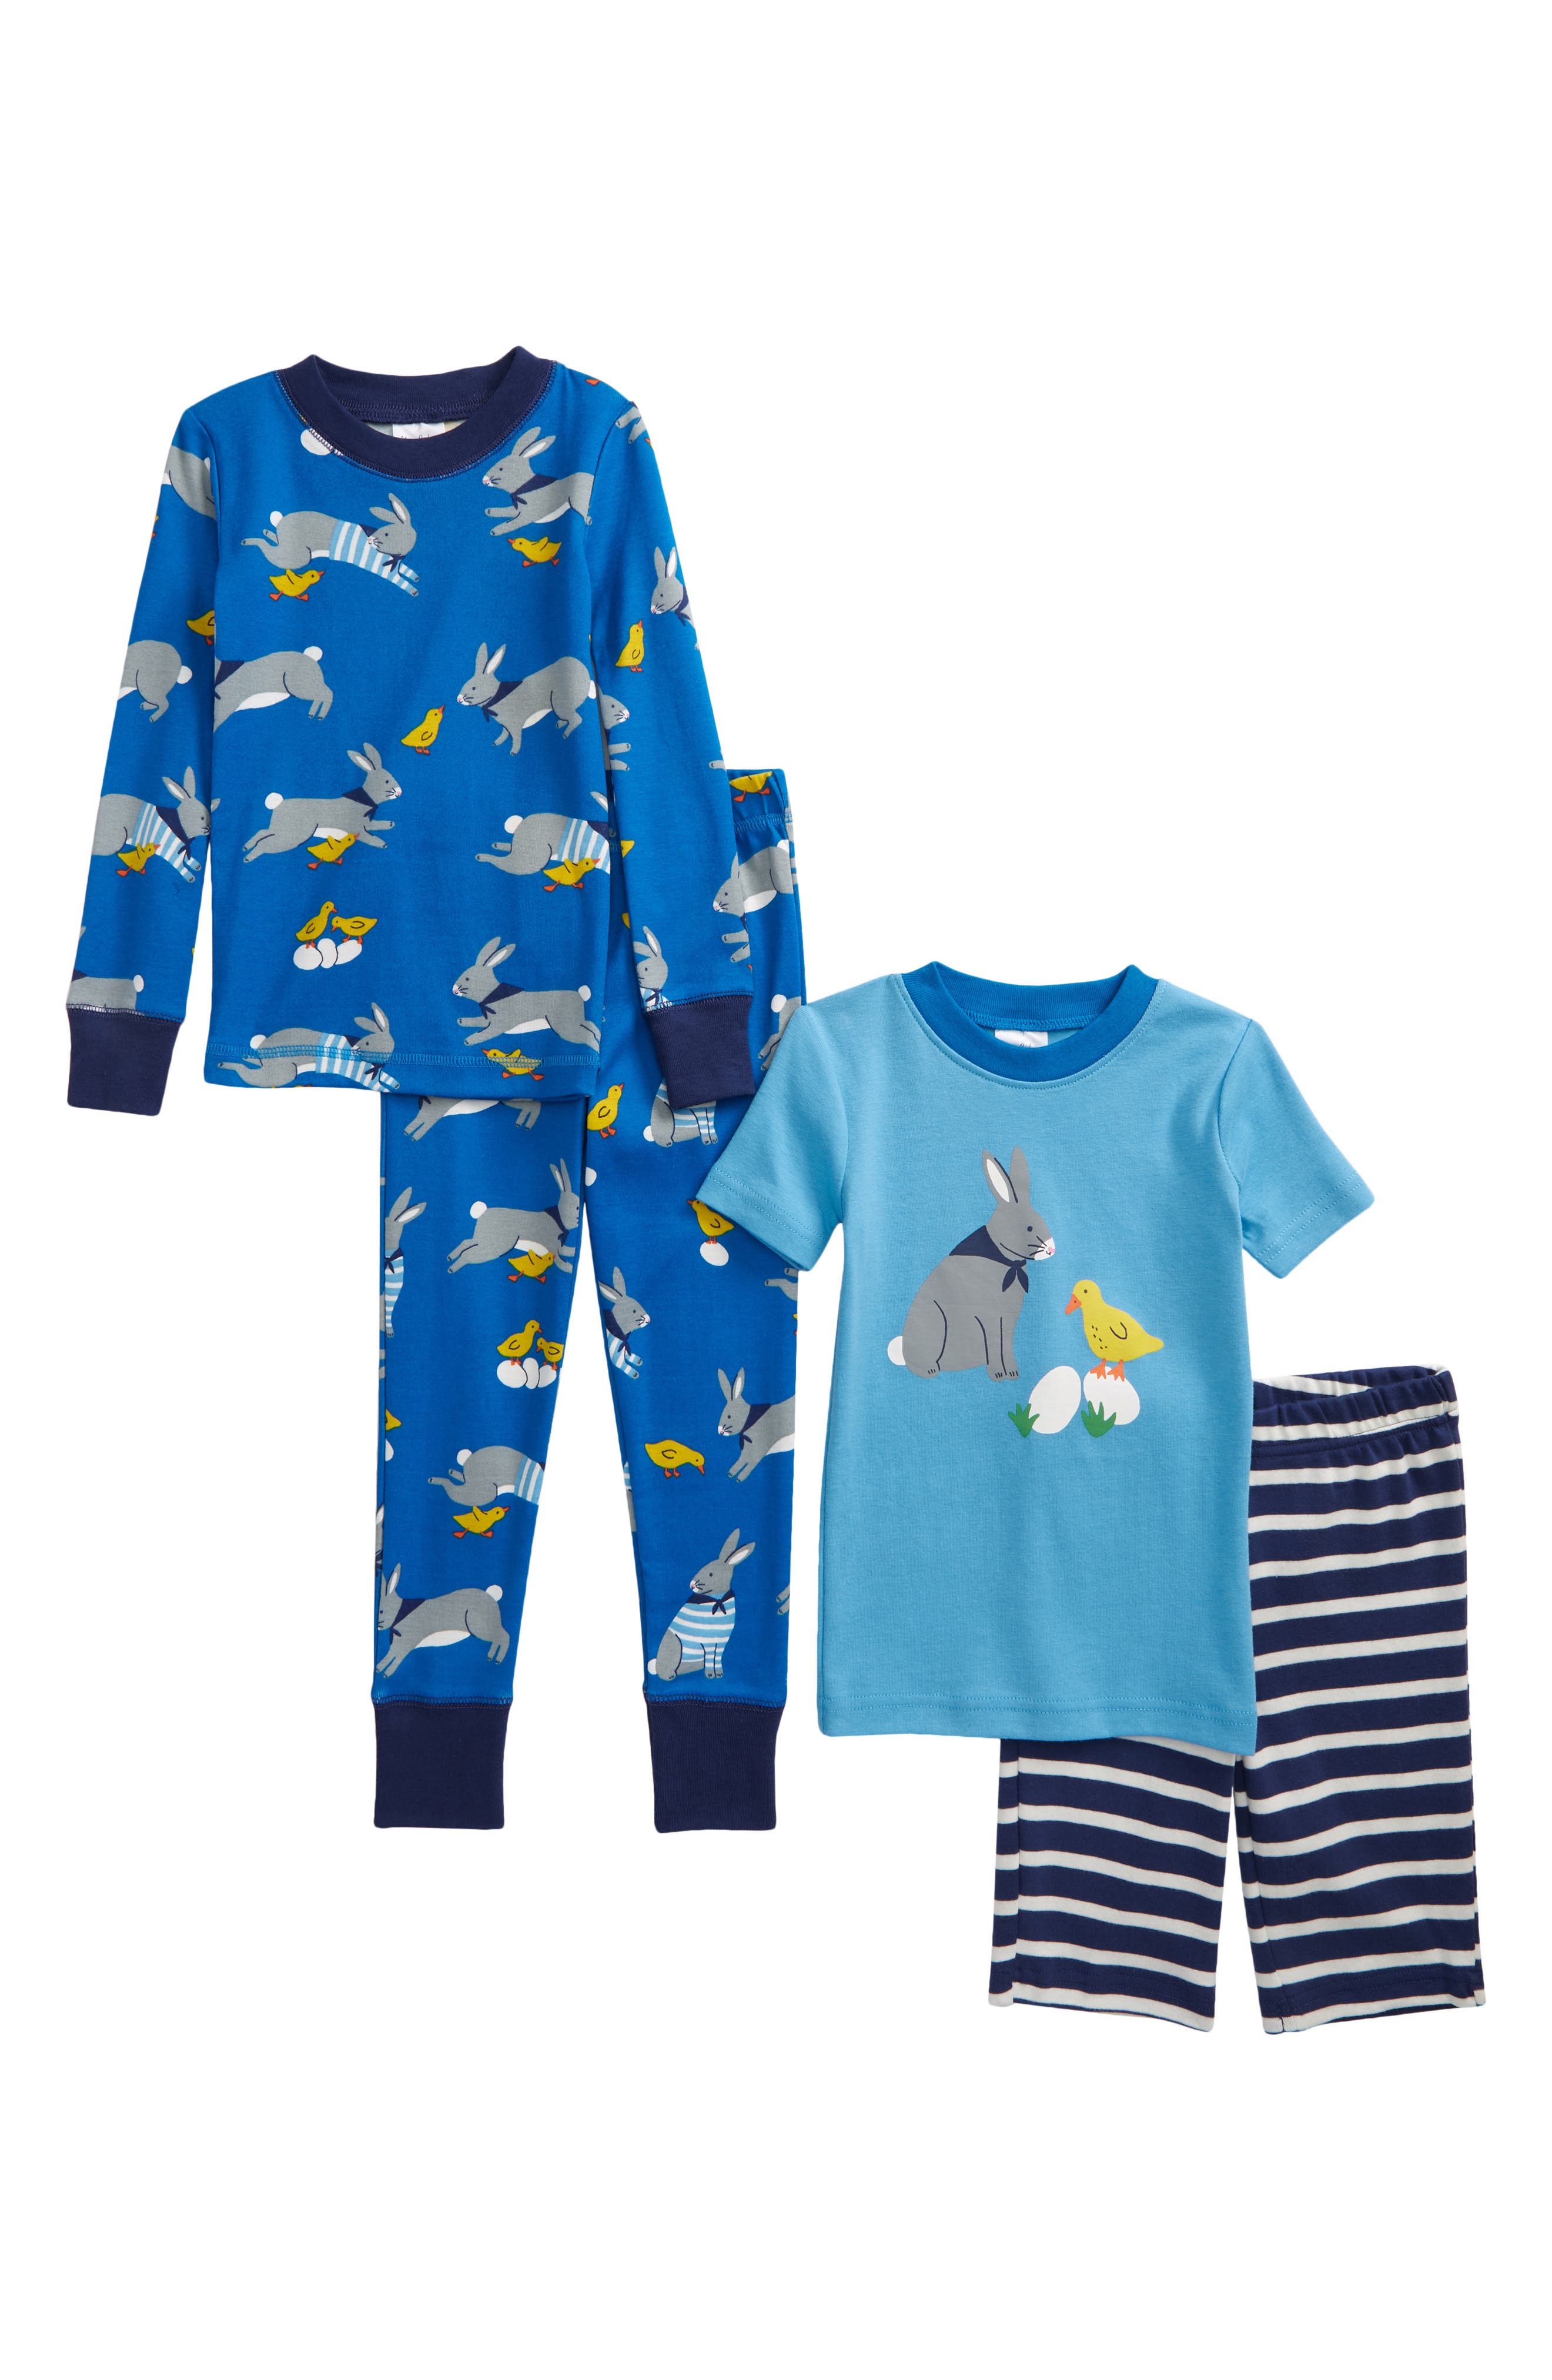 THECrafts Little Boys Kids Pajamas Sets 100% Cotton Pjs Toddler